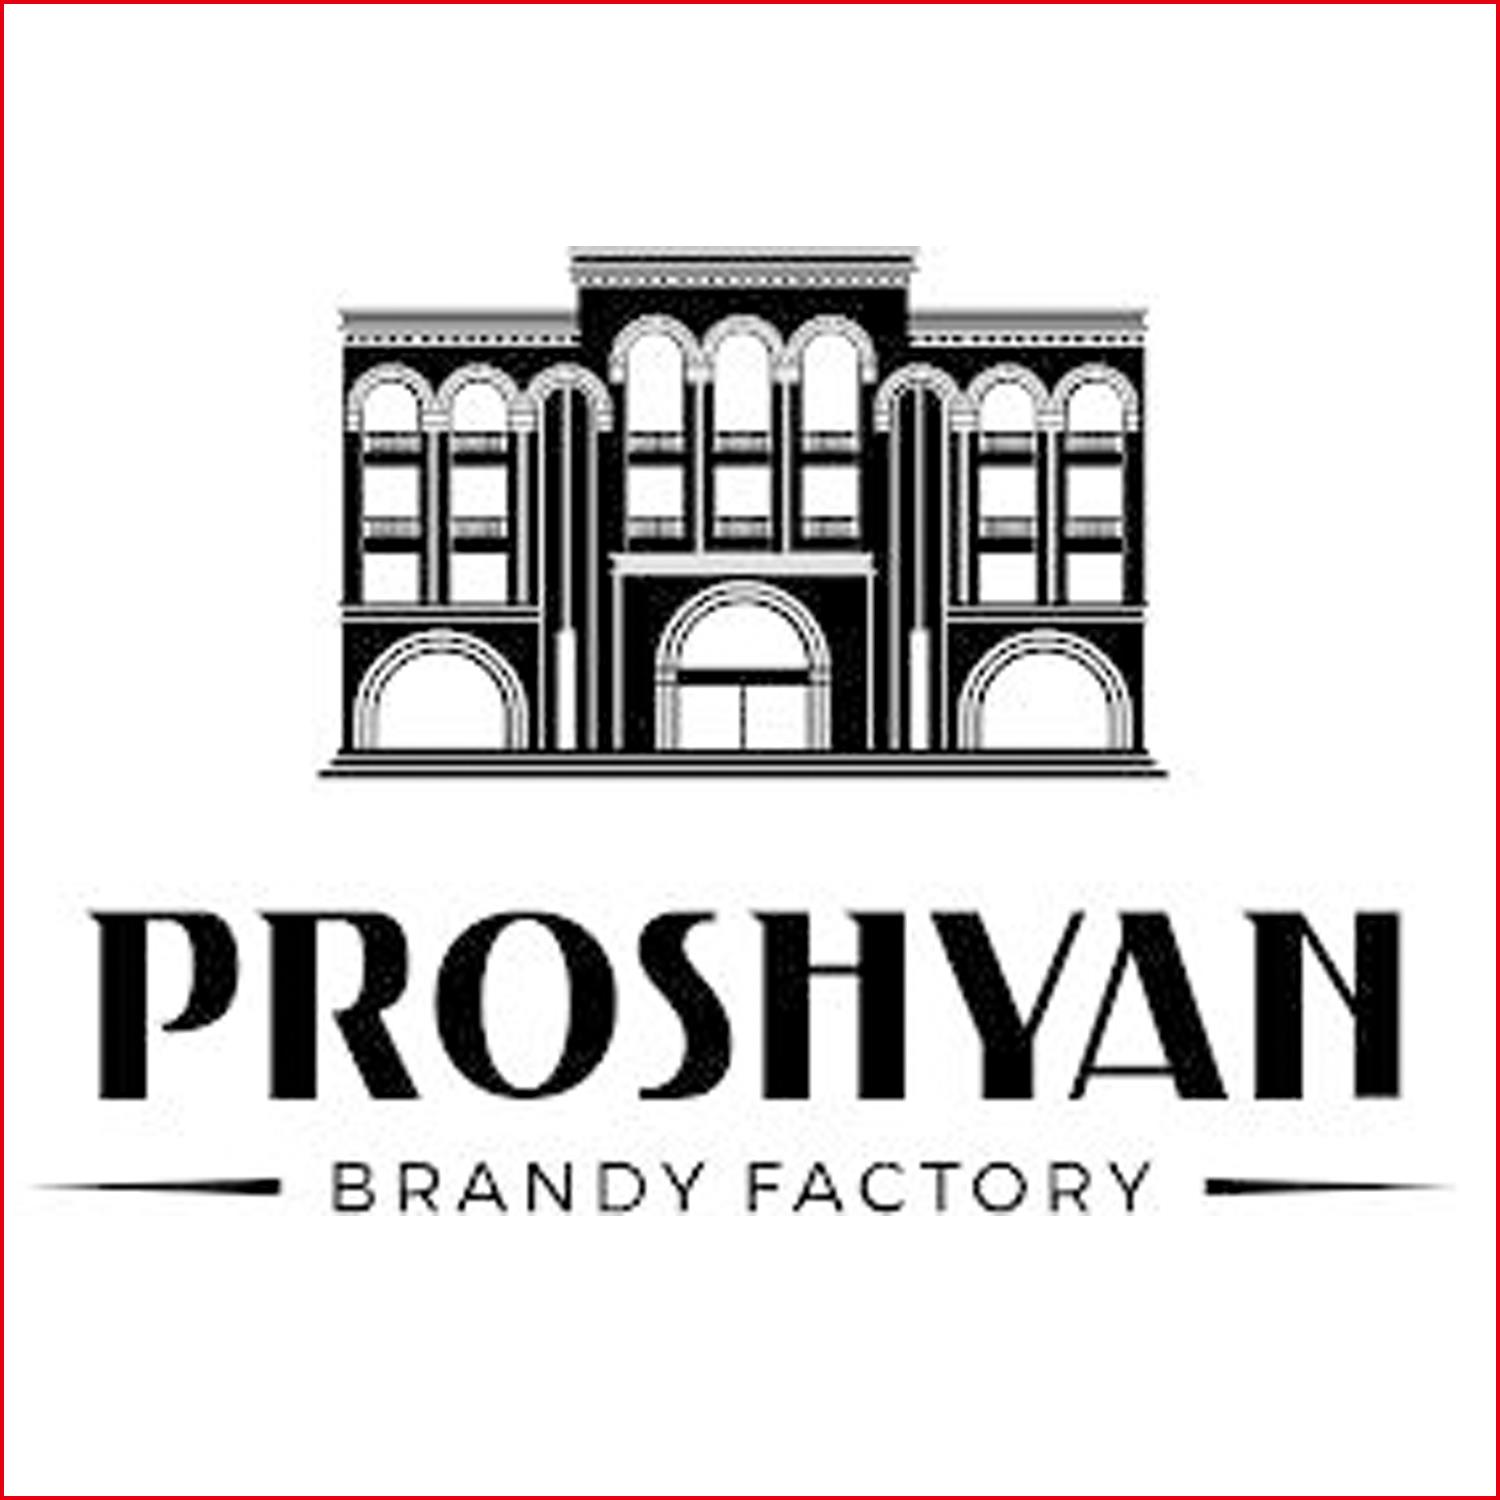 PROSHYAN Proshyan Brandy Factory